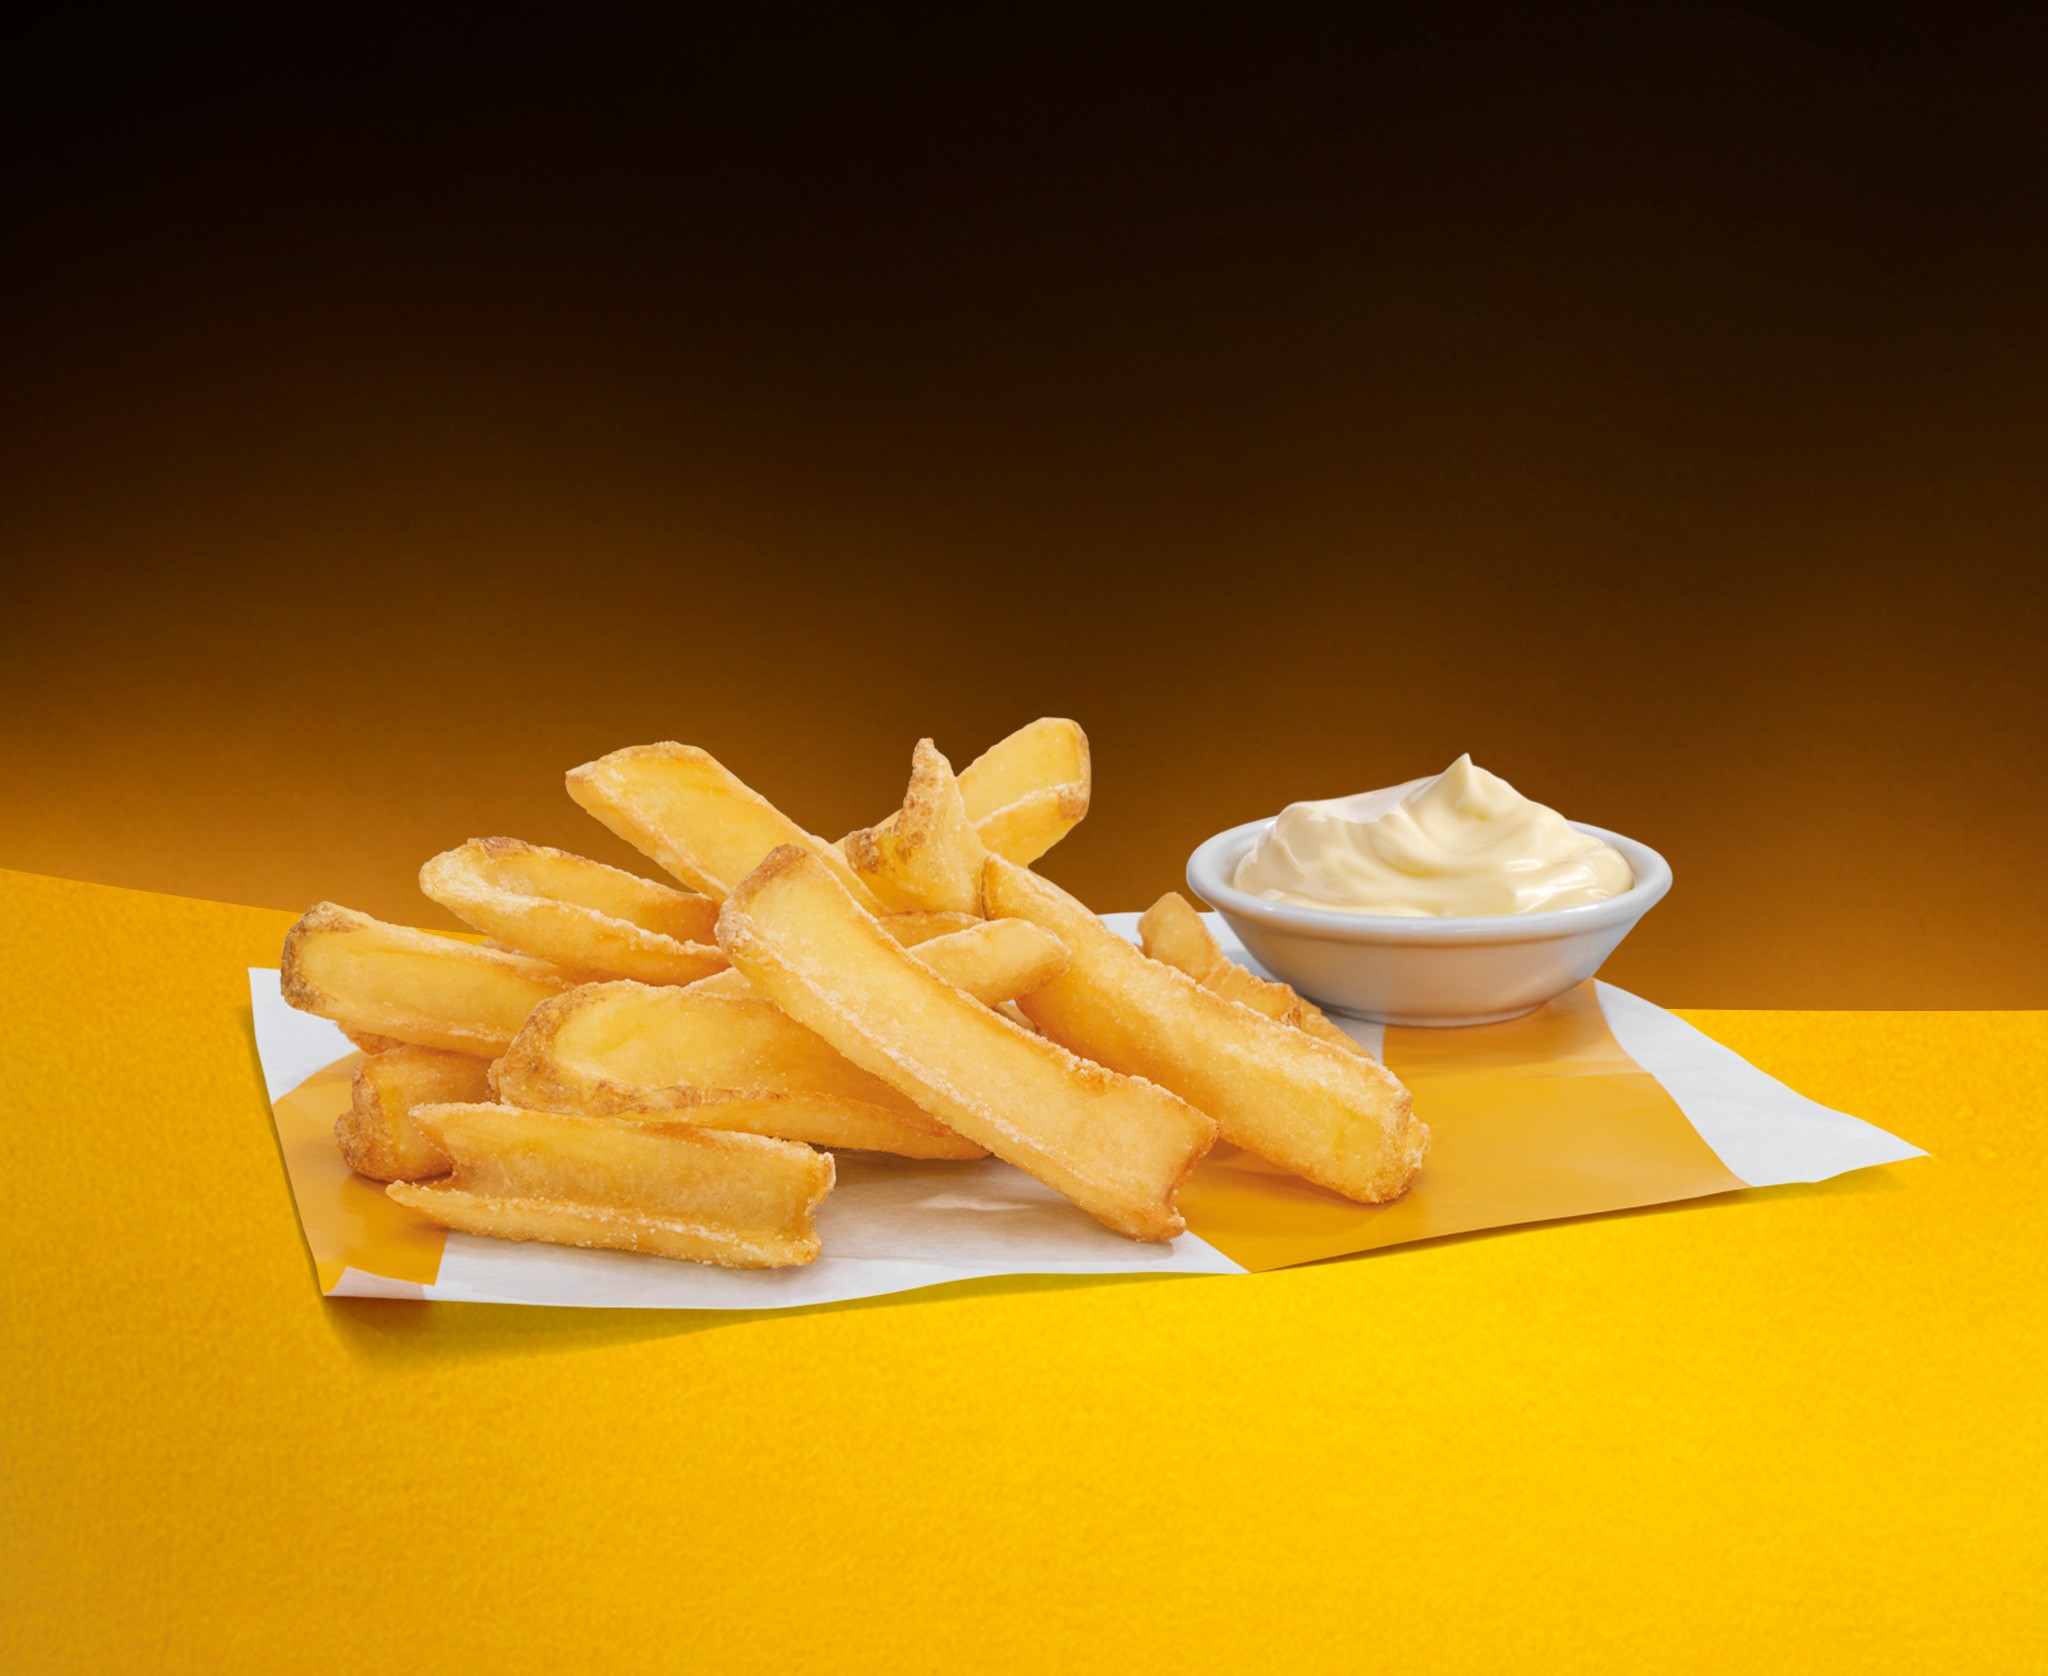 Rustic Fries a Sour Cream Dip